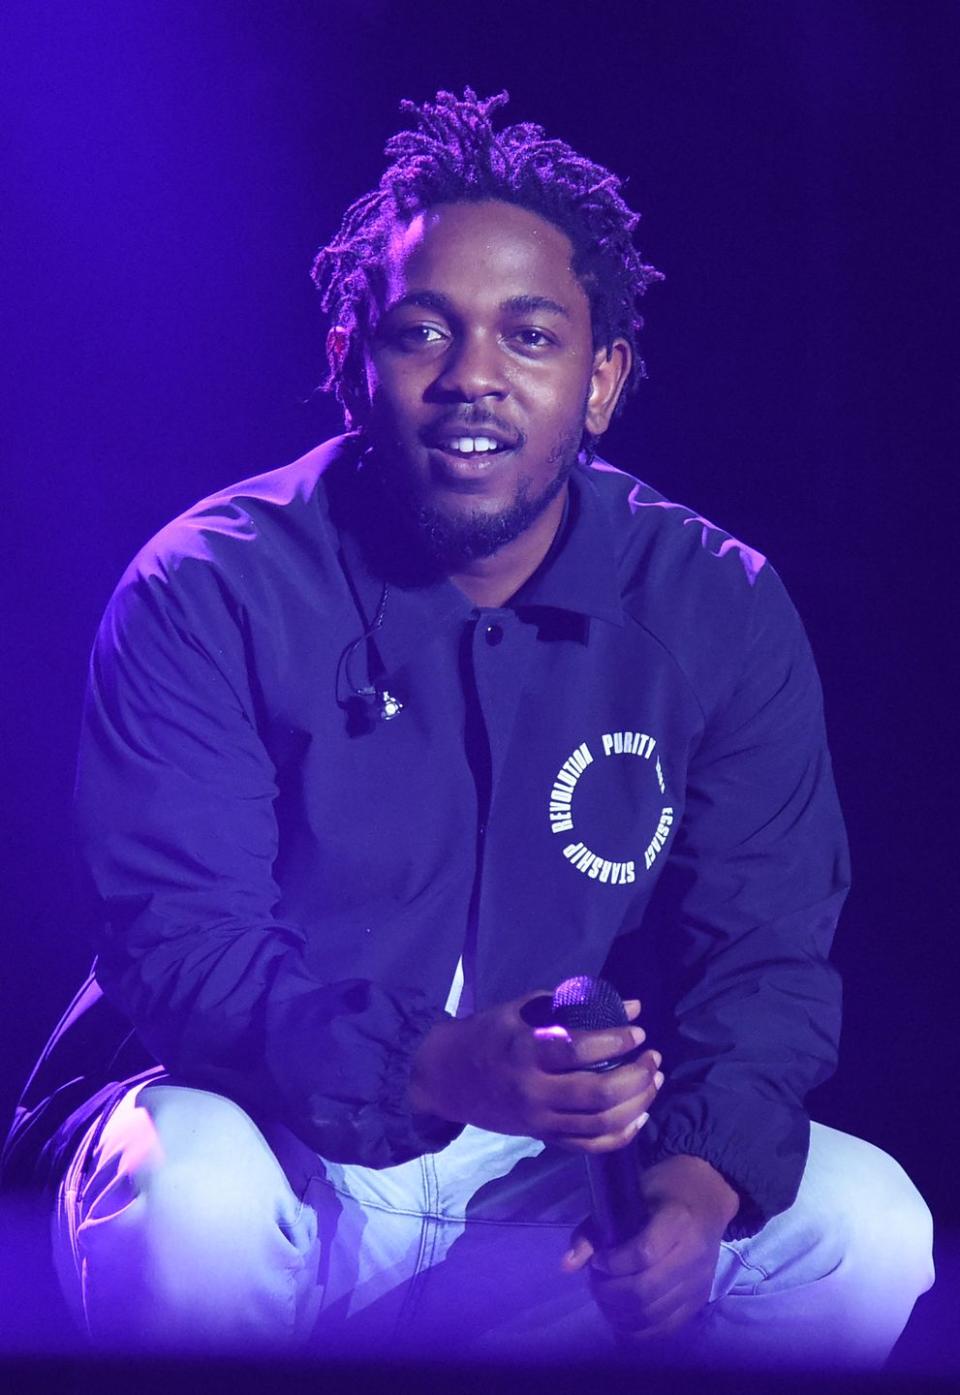 41) Kendrick Lamar: Then